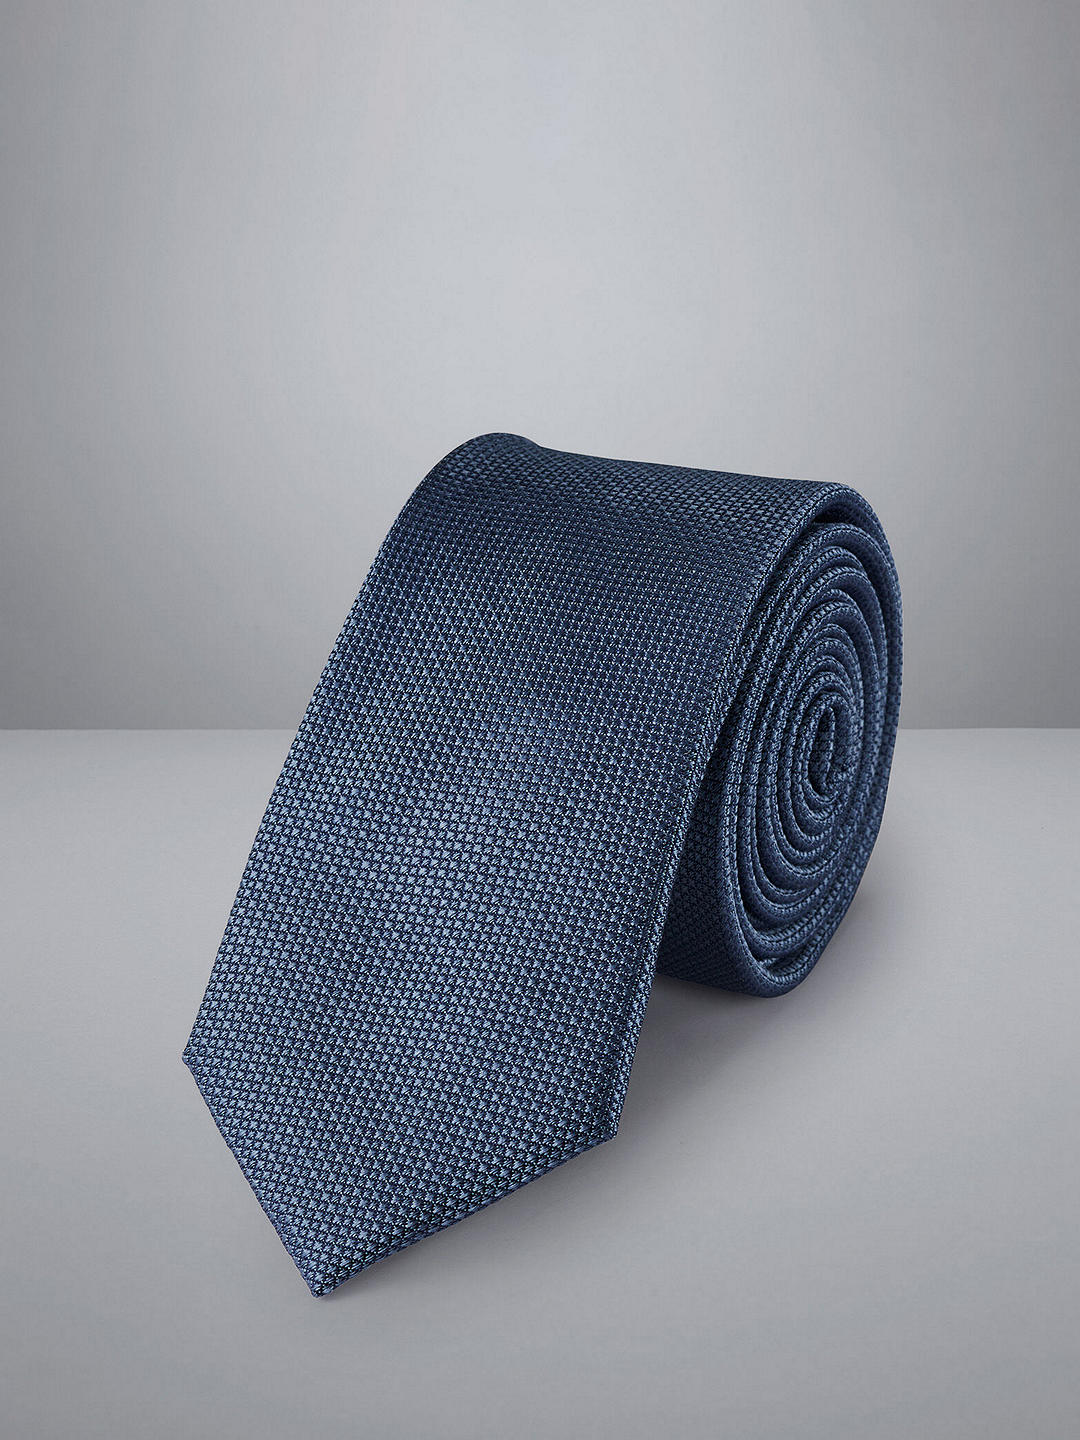 Charles Tyrwhitt Stain Resistant Textured Silk Tie, Steel Blue